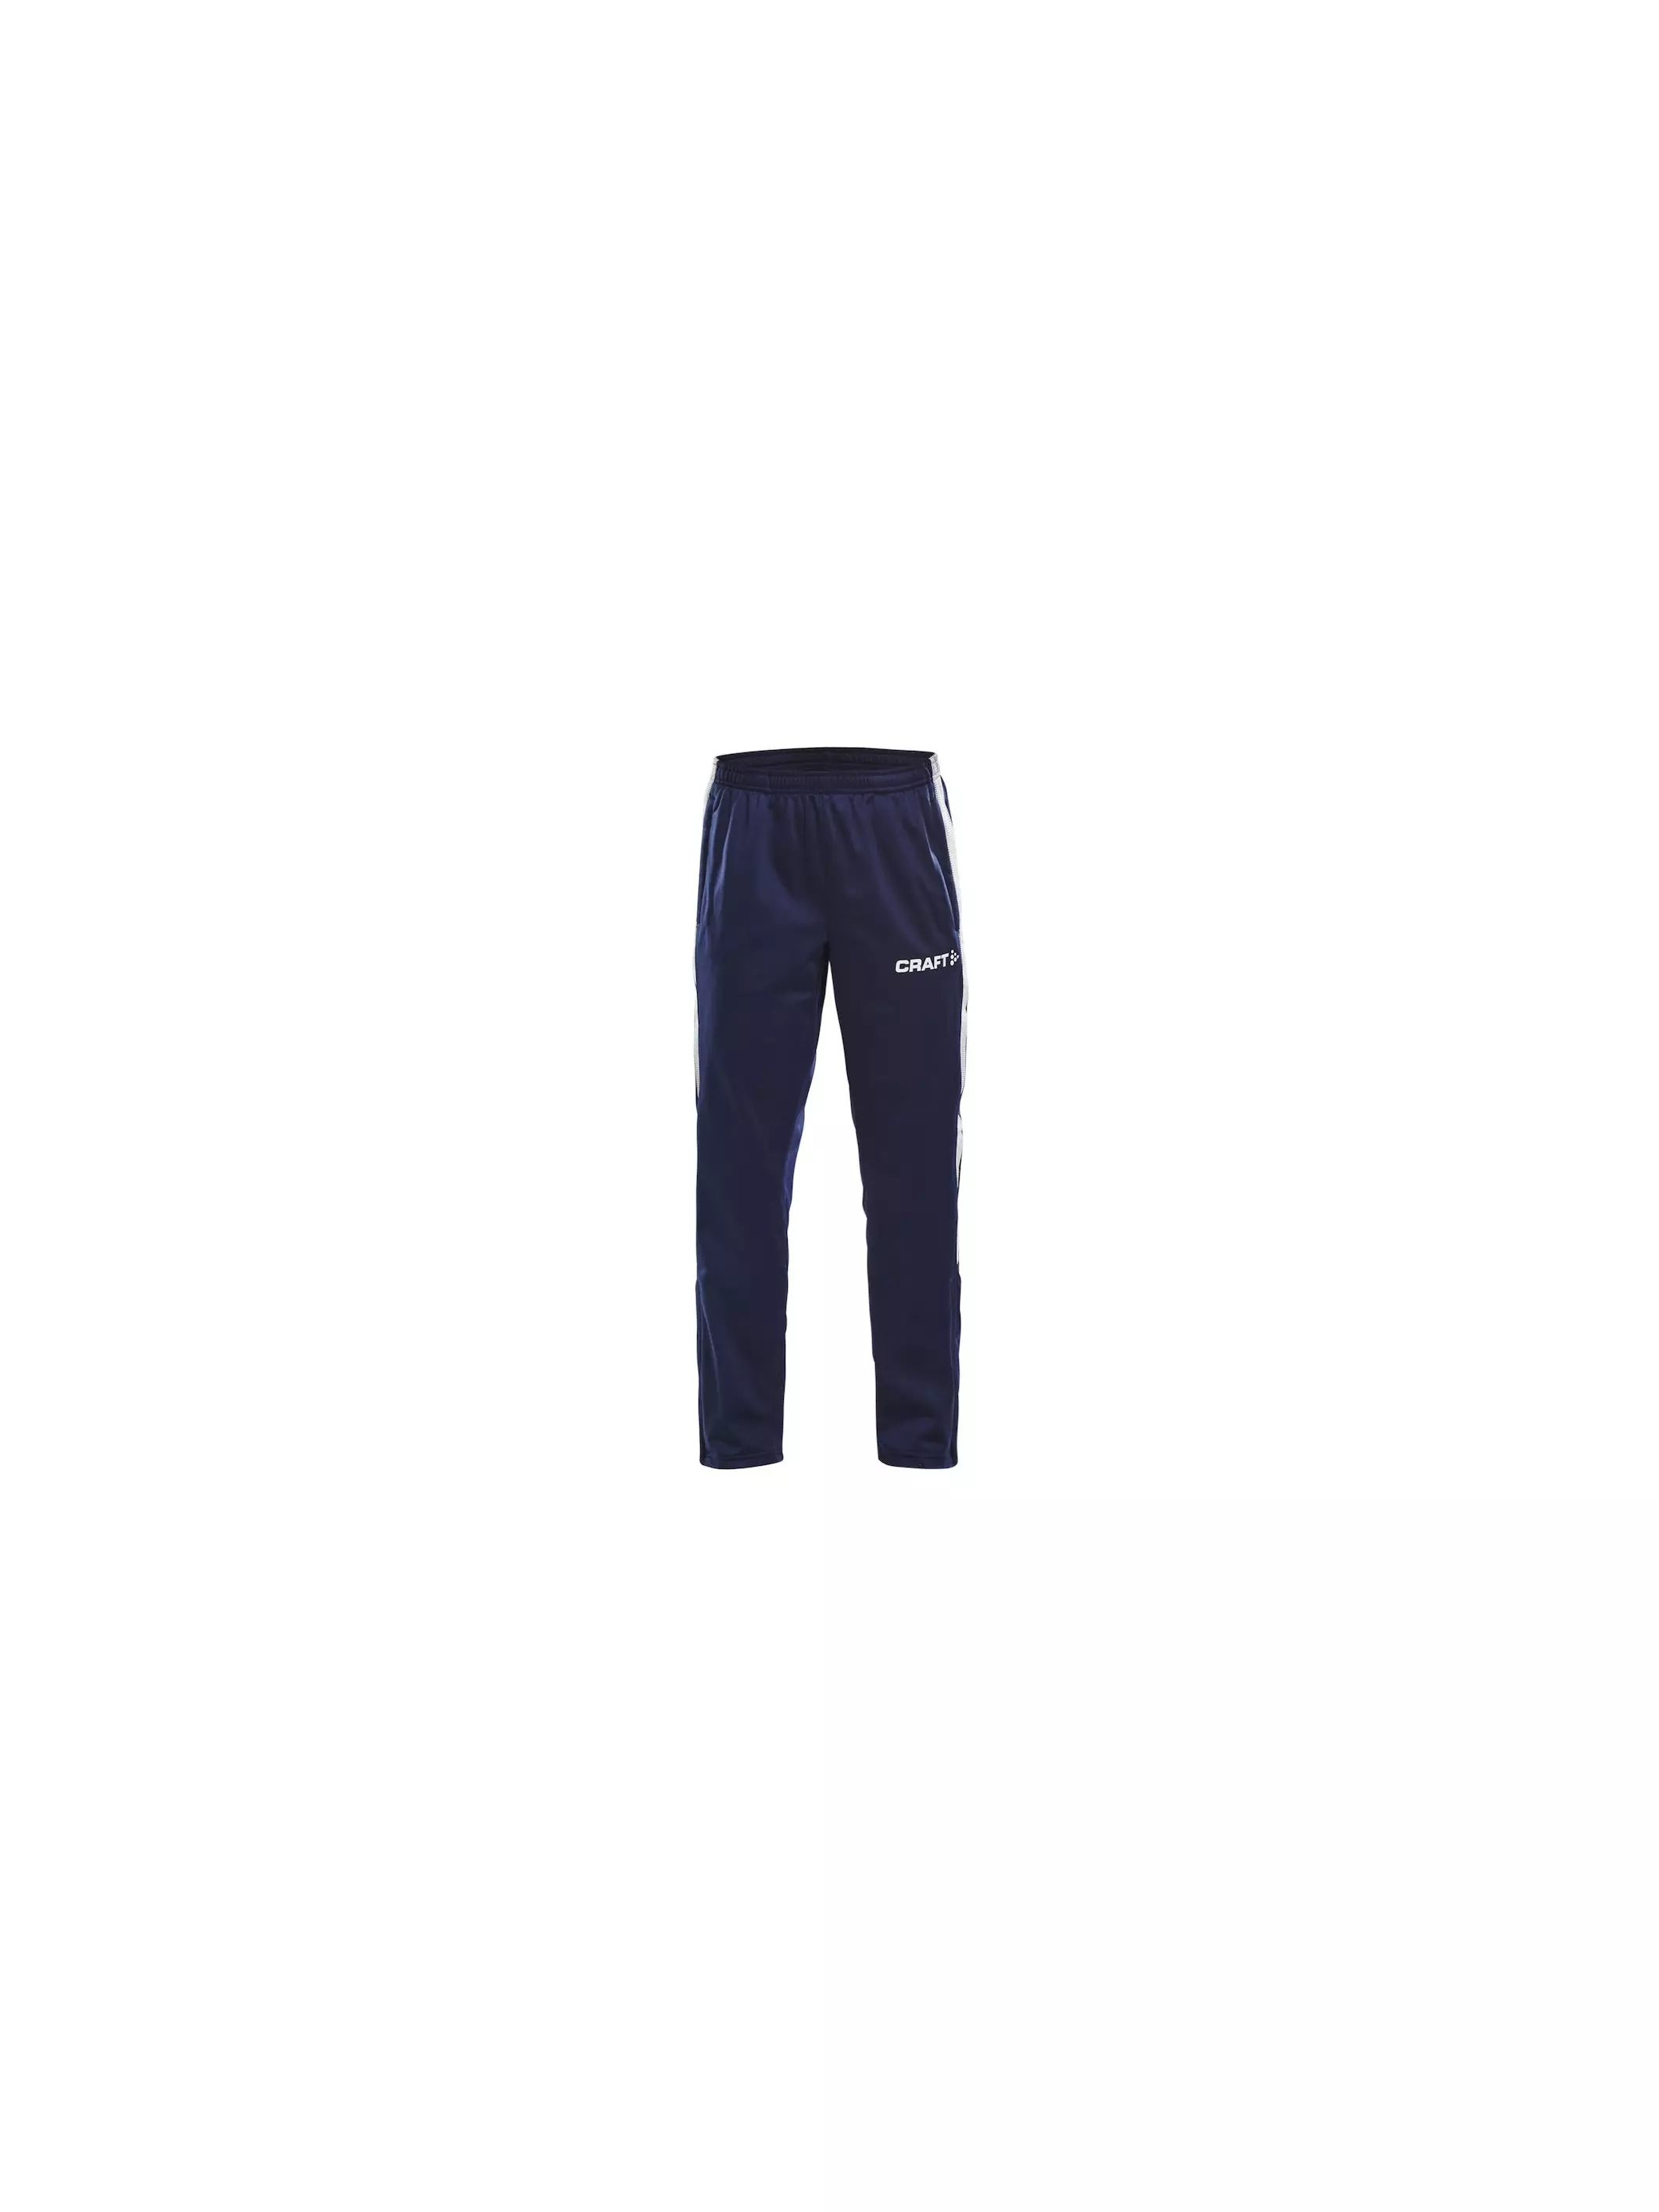 Pantalons & Collants Craft PRO CONTROL PANTS JR - 1906715